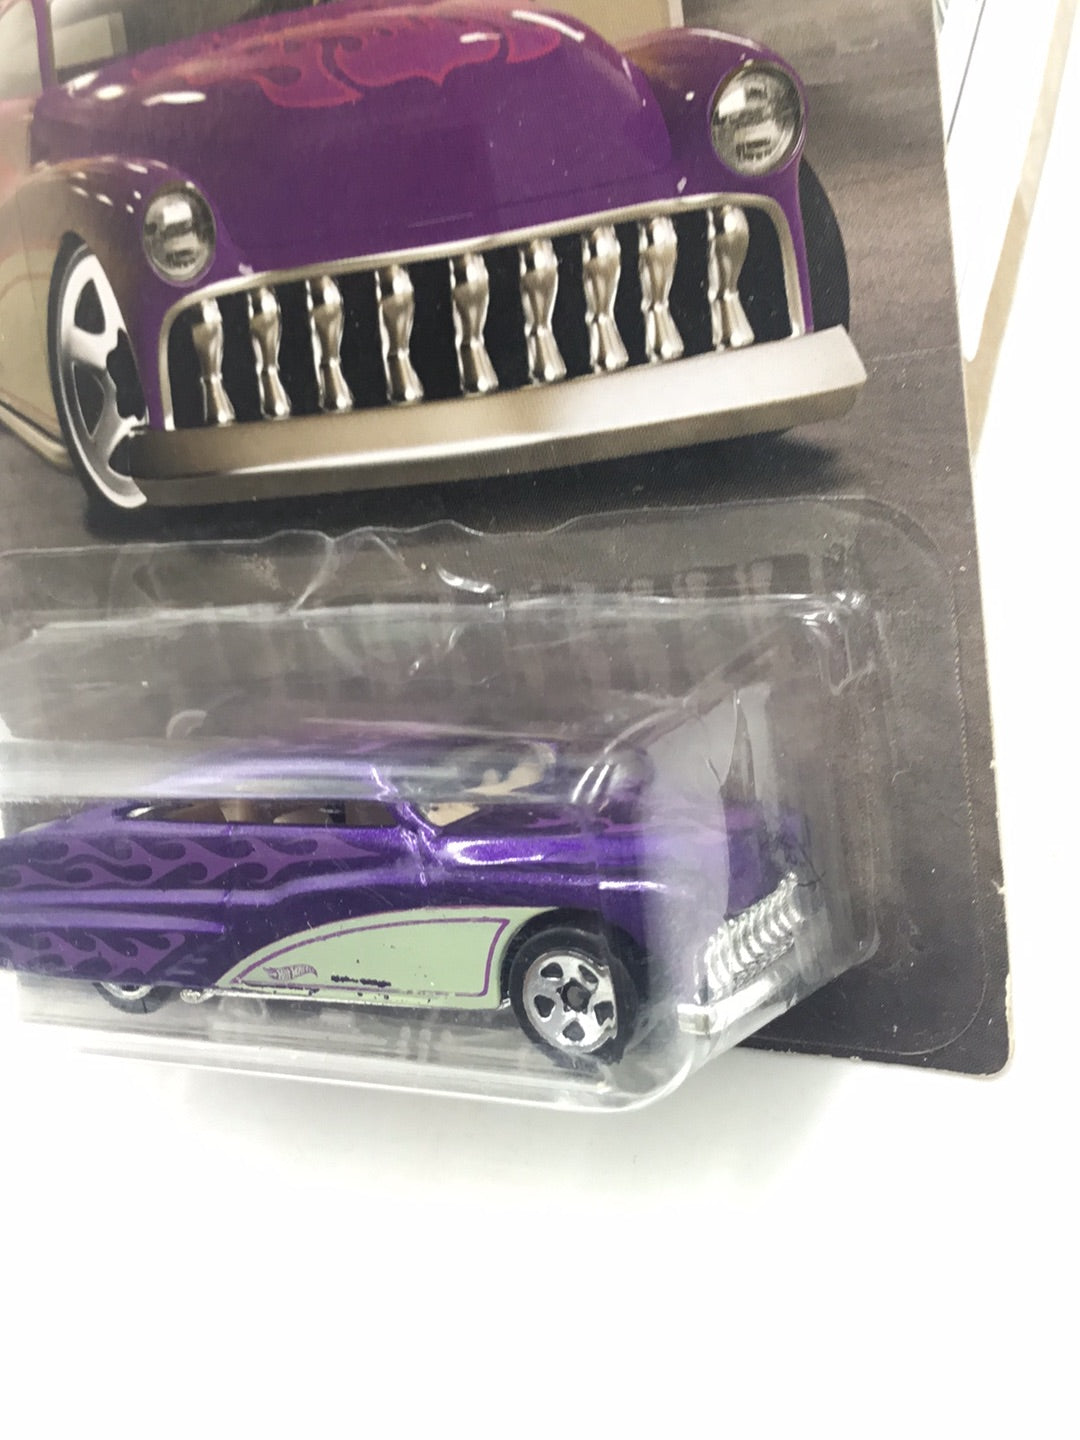 Hot Wheels Garage Series Purple Passion 6/10 II7